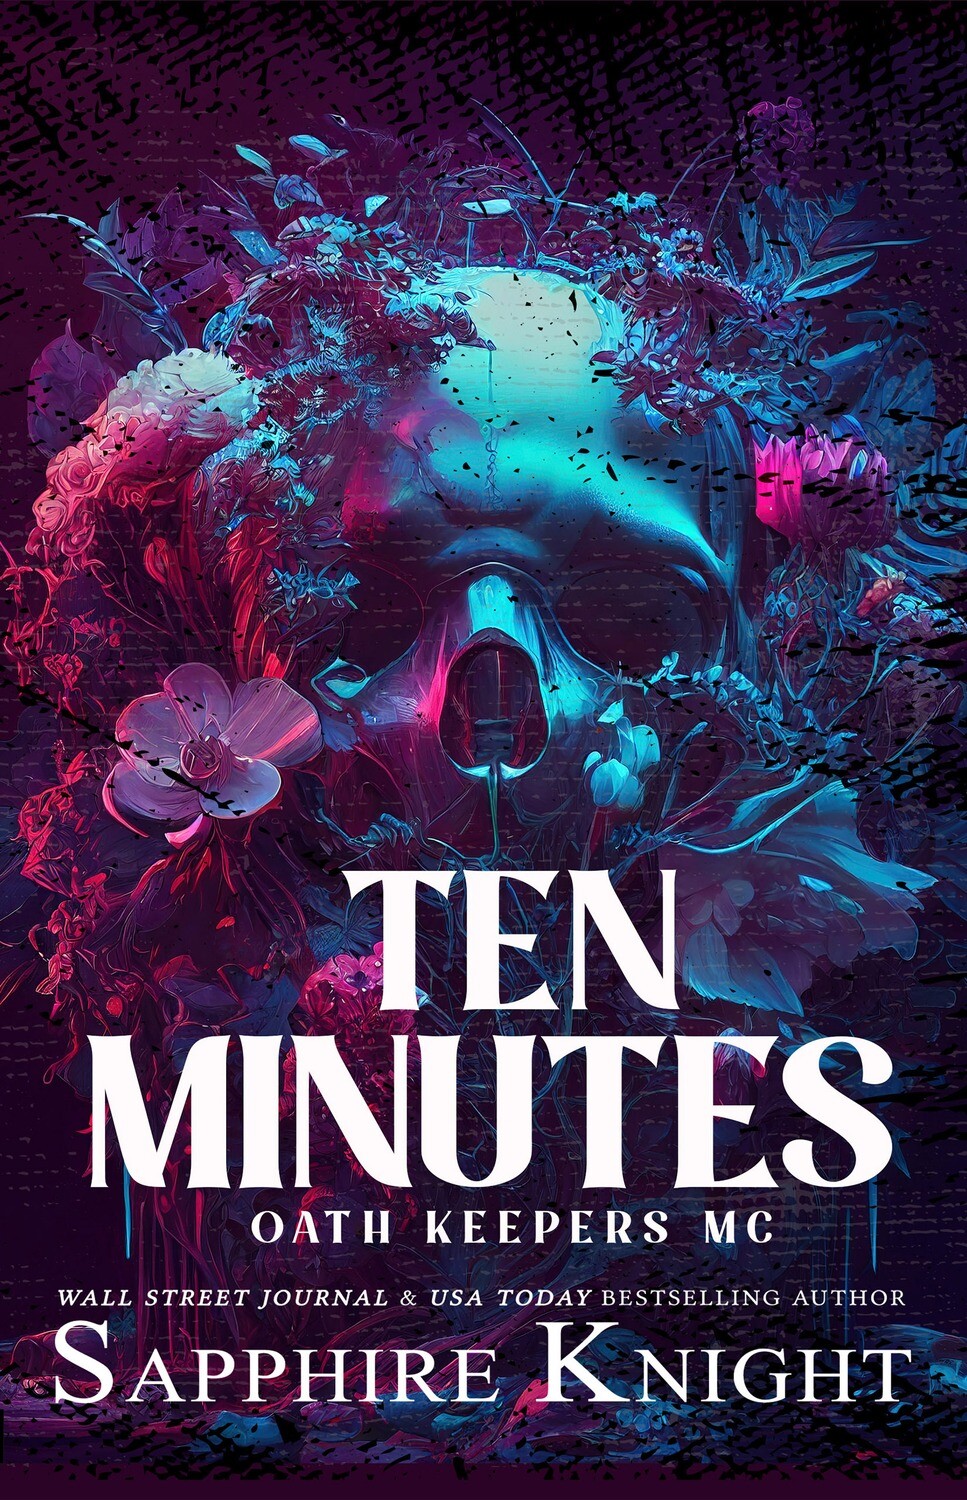 Ten Minutes alternative + FREE ebook download